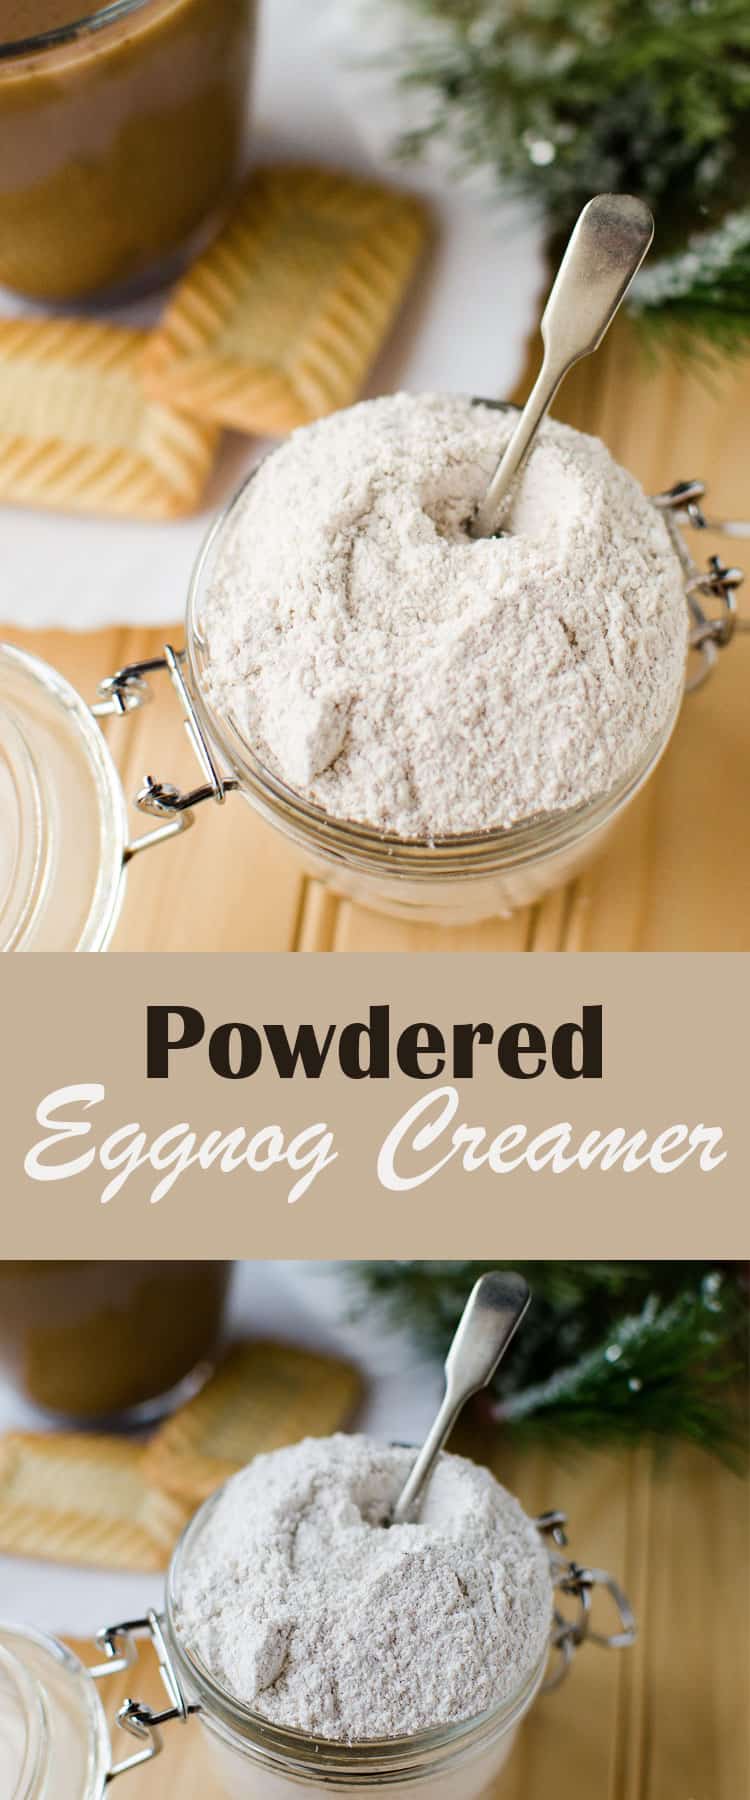 Powdered Eggnog Creamer